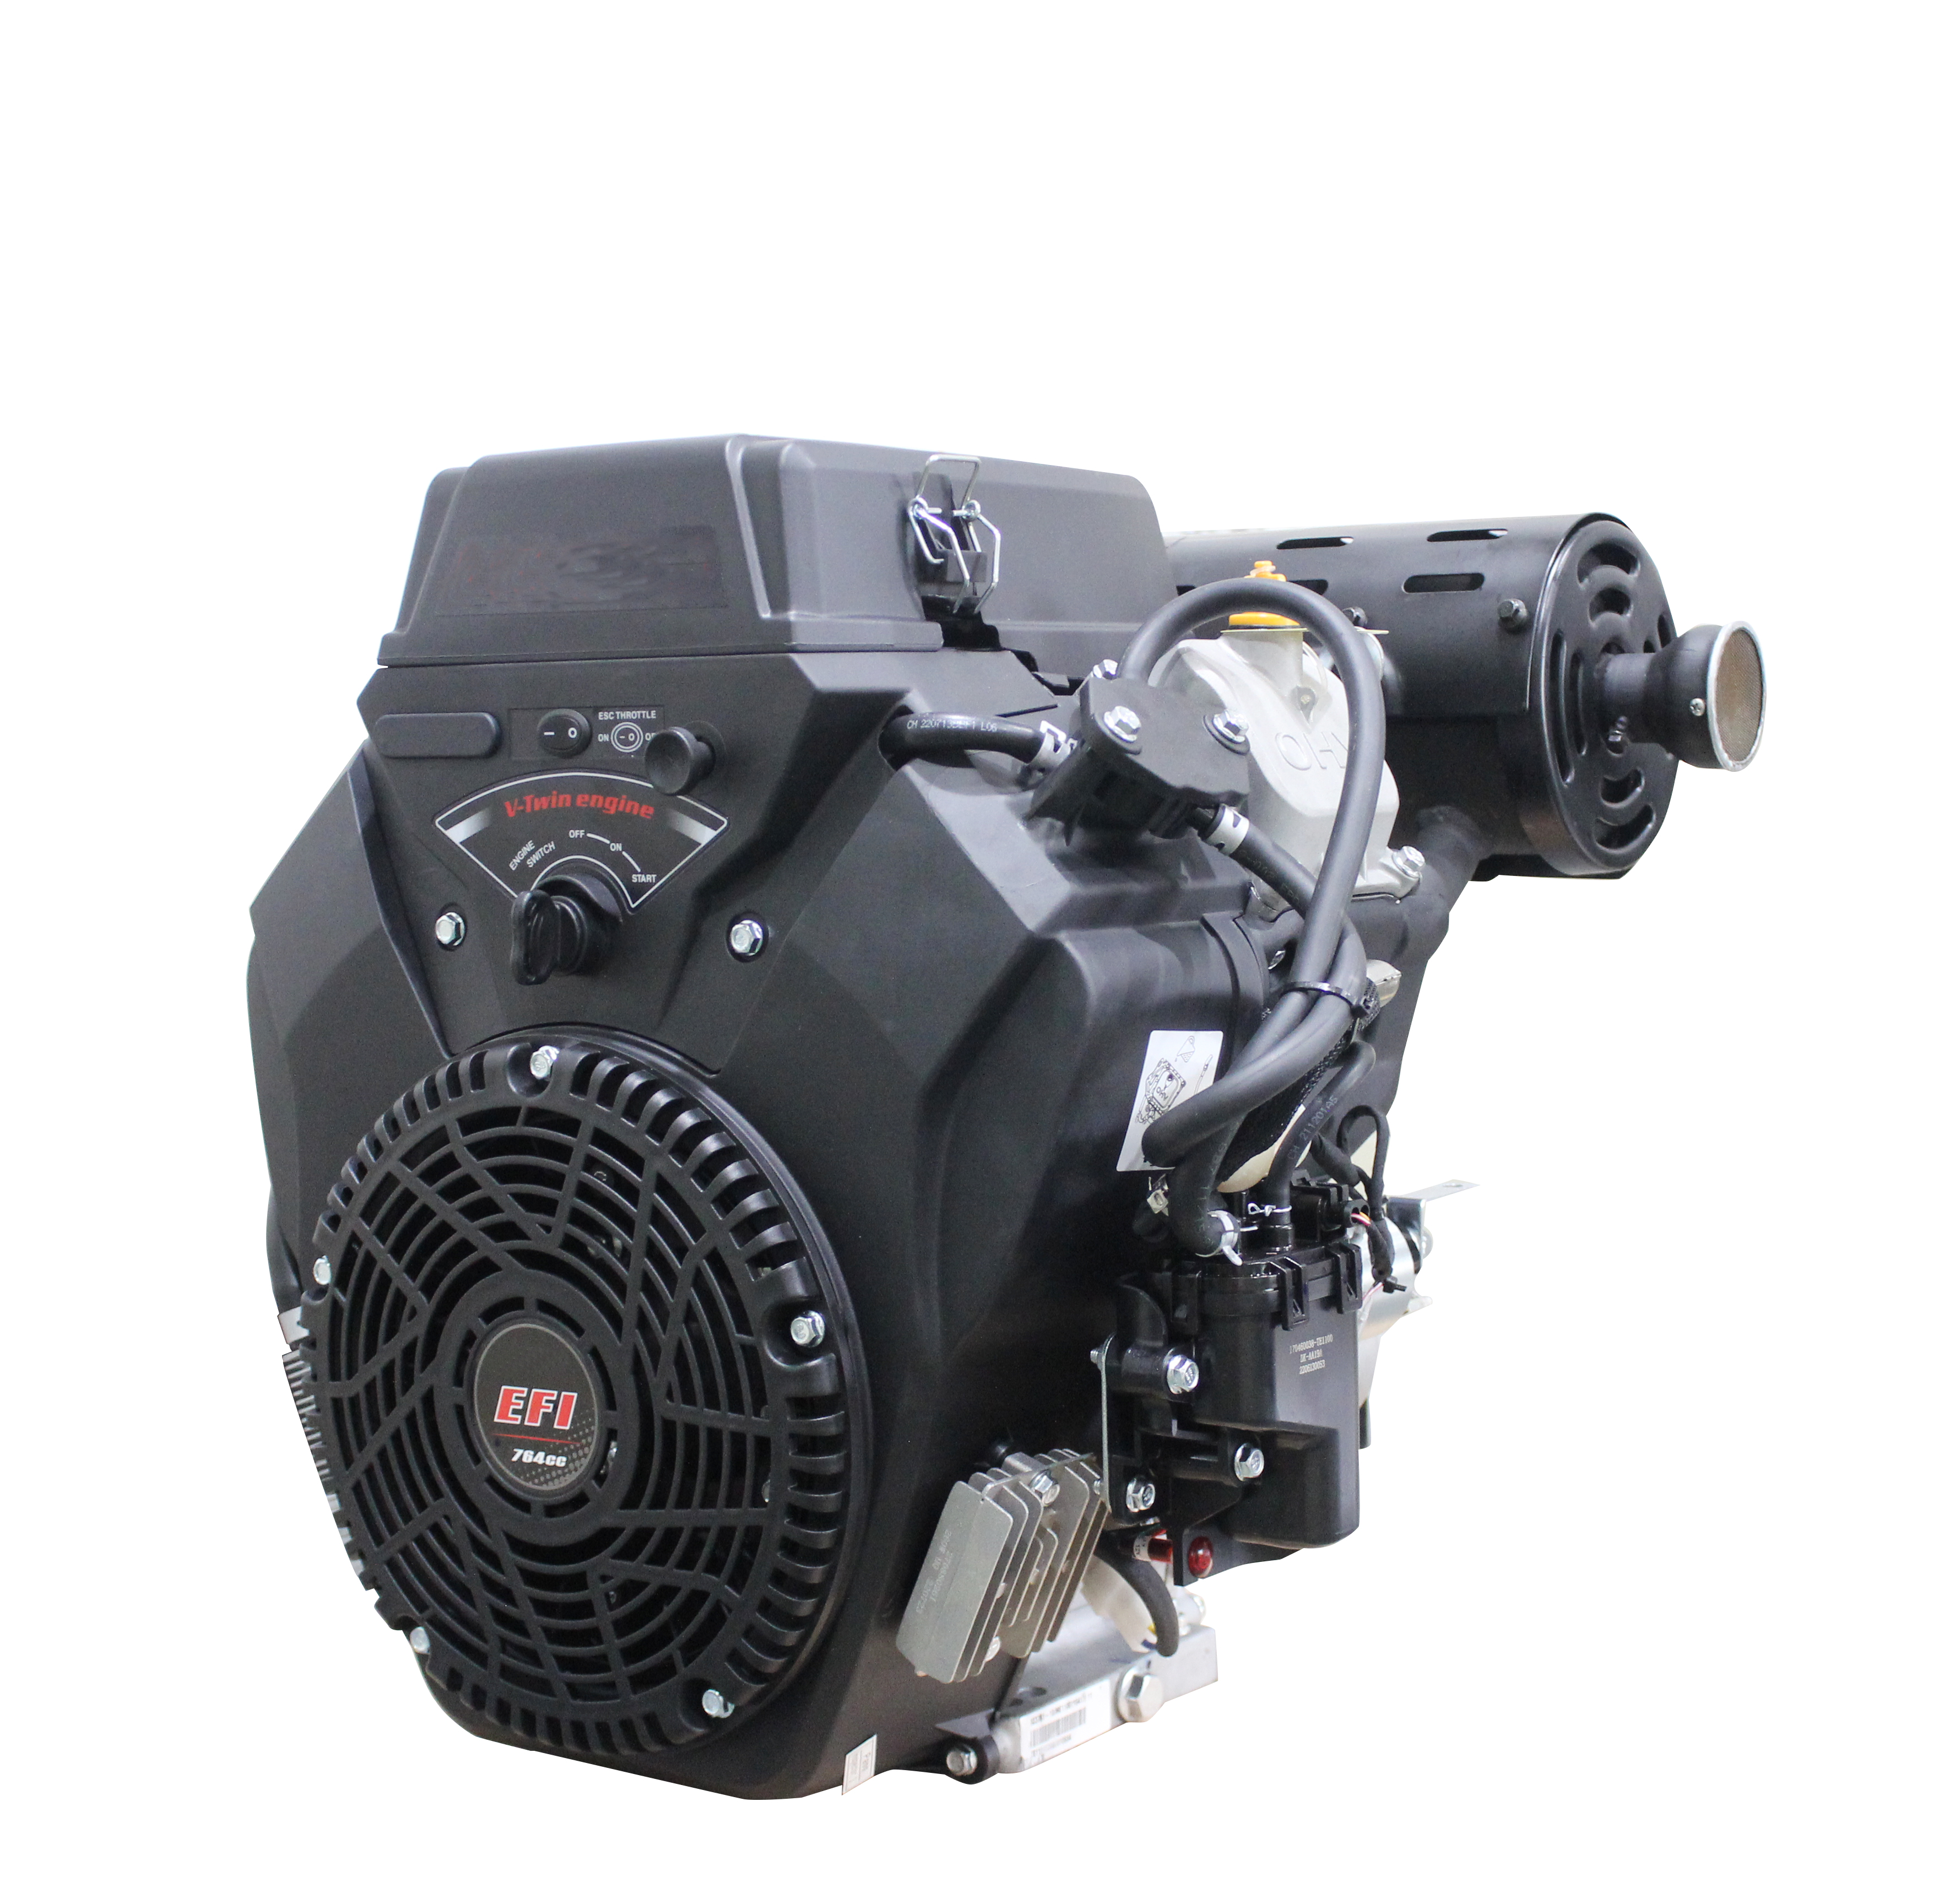 27 PS 764 cc Industriebenzin V Twin Engine EPA/EURO-V